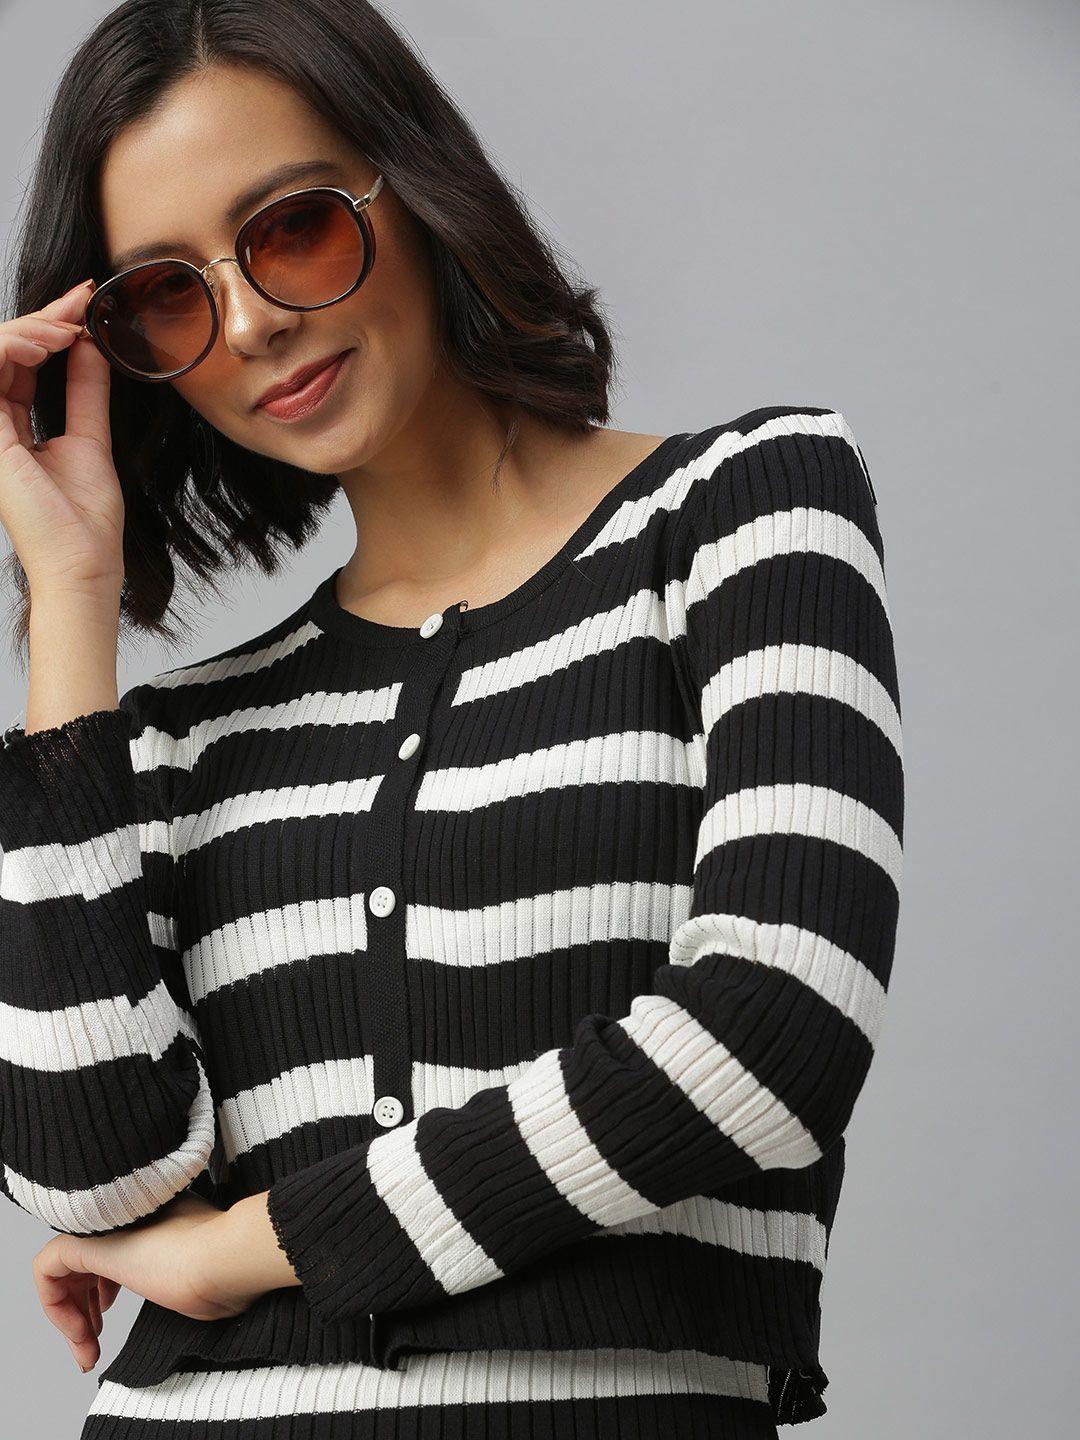 showoff-black-striped-sweater-dress